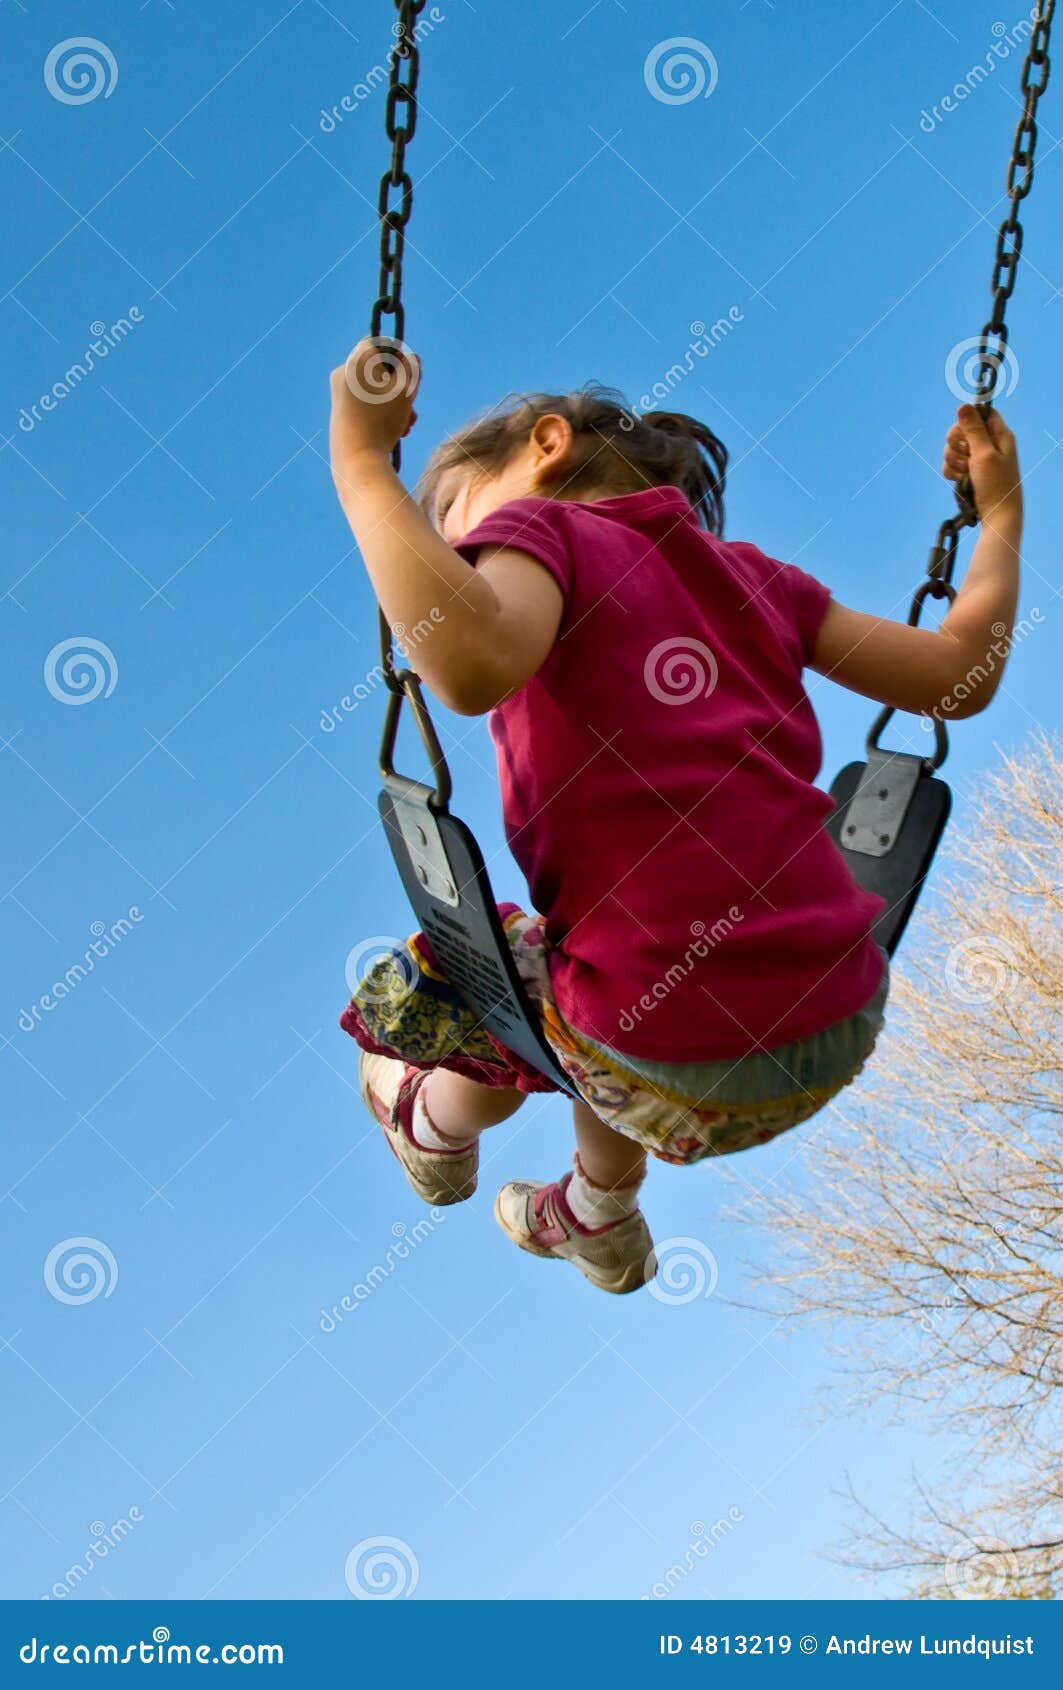 girl swings into sky